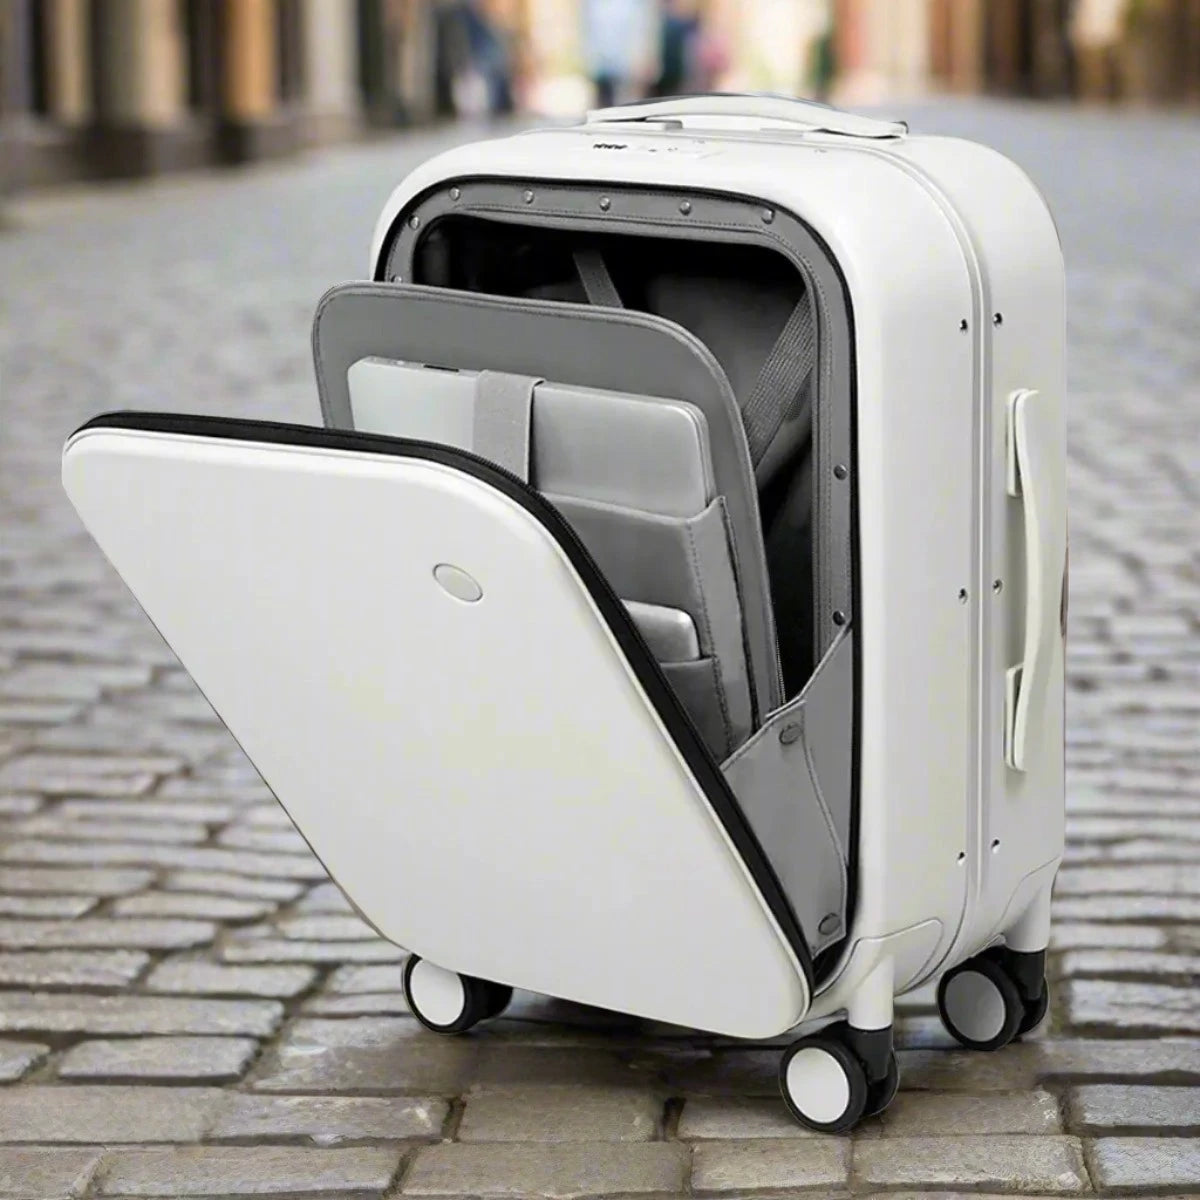 MIXI Brand Luxury Design Carry On Suitcase TSA Lock 18, 20, 24 Inch